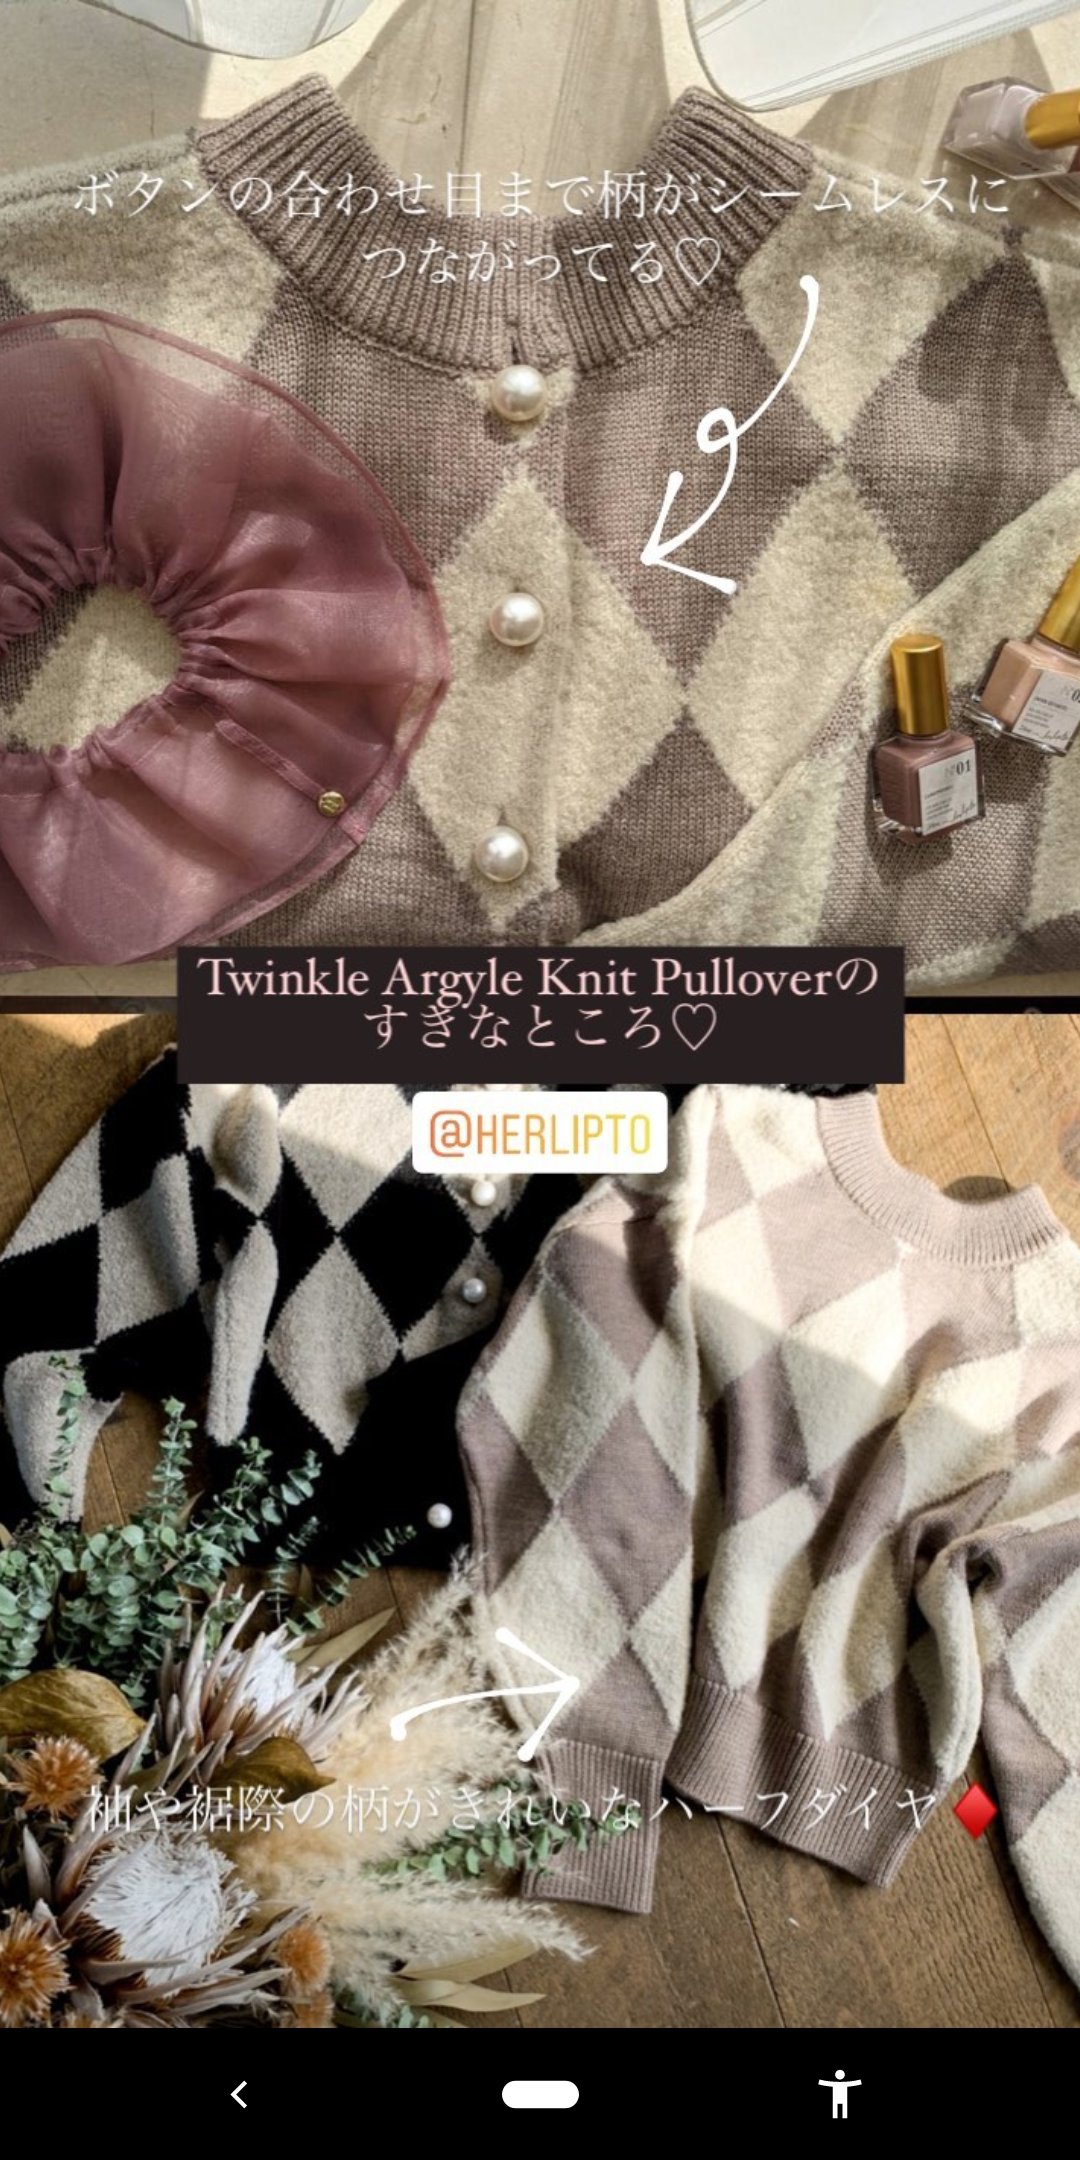 Herlipto Twinkle Argyle Knit Pullover